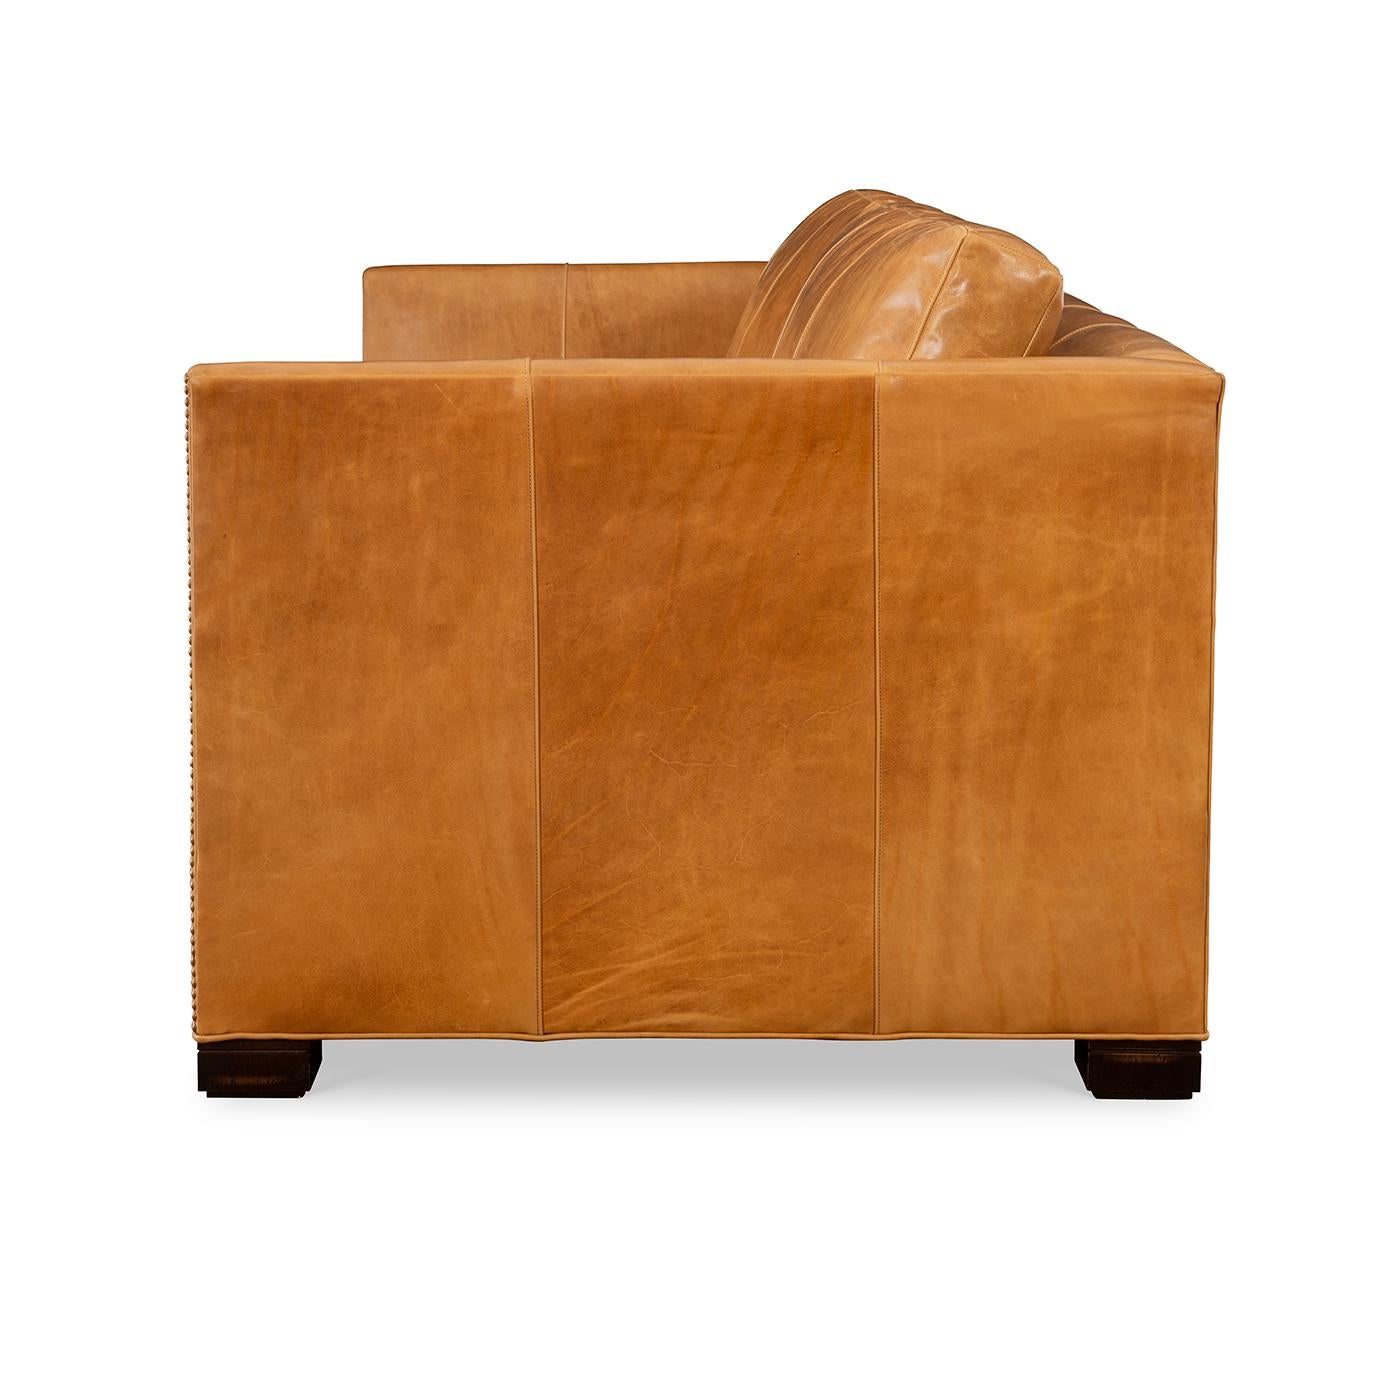 North American Modern Leather Thorpe Sofa For Sale